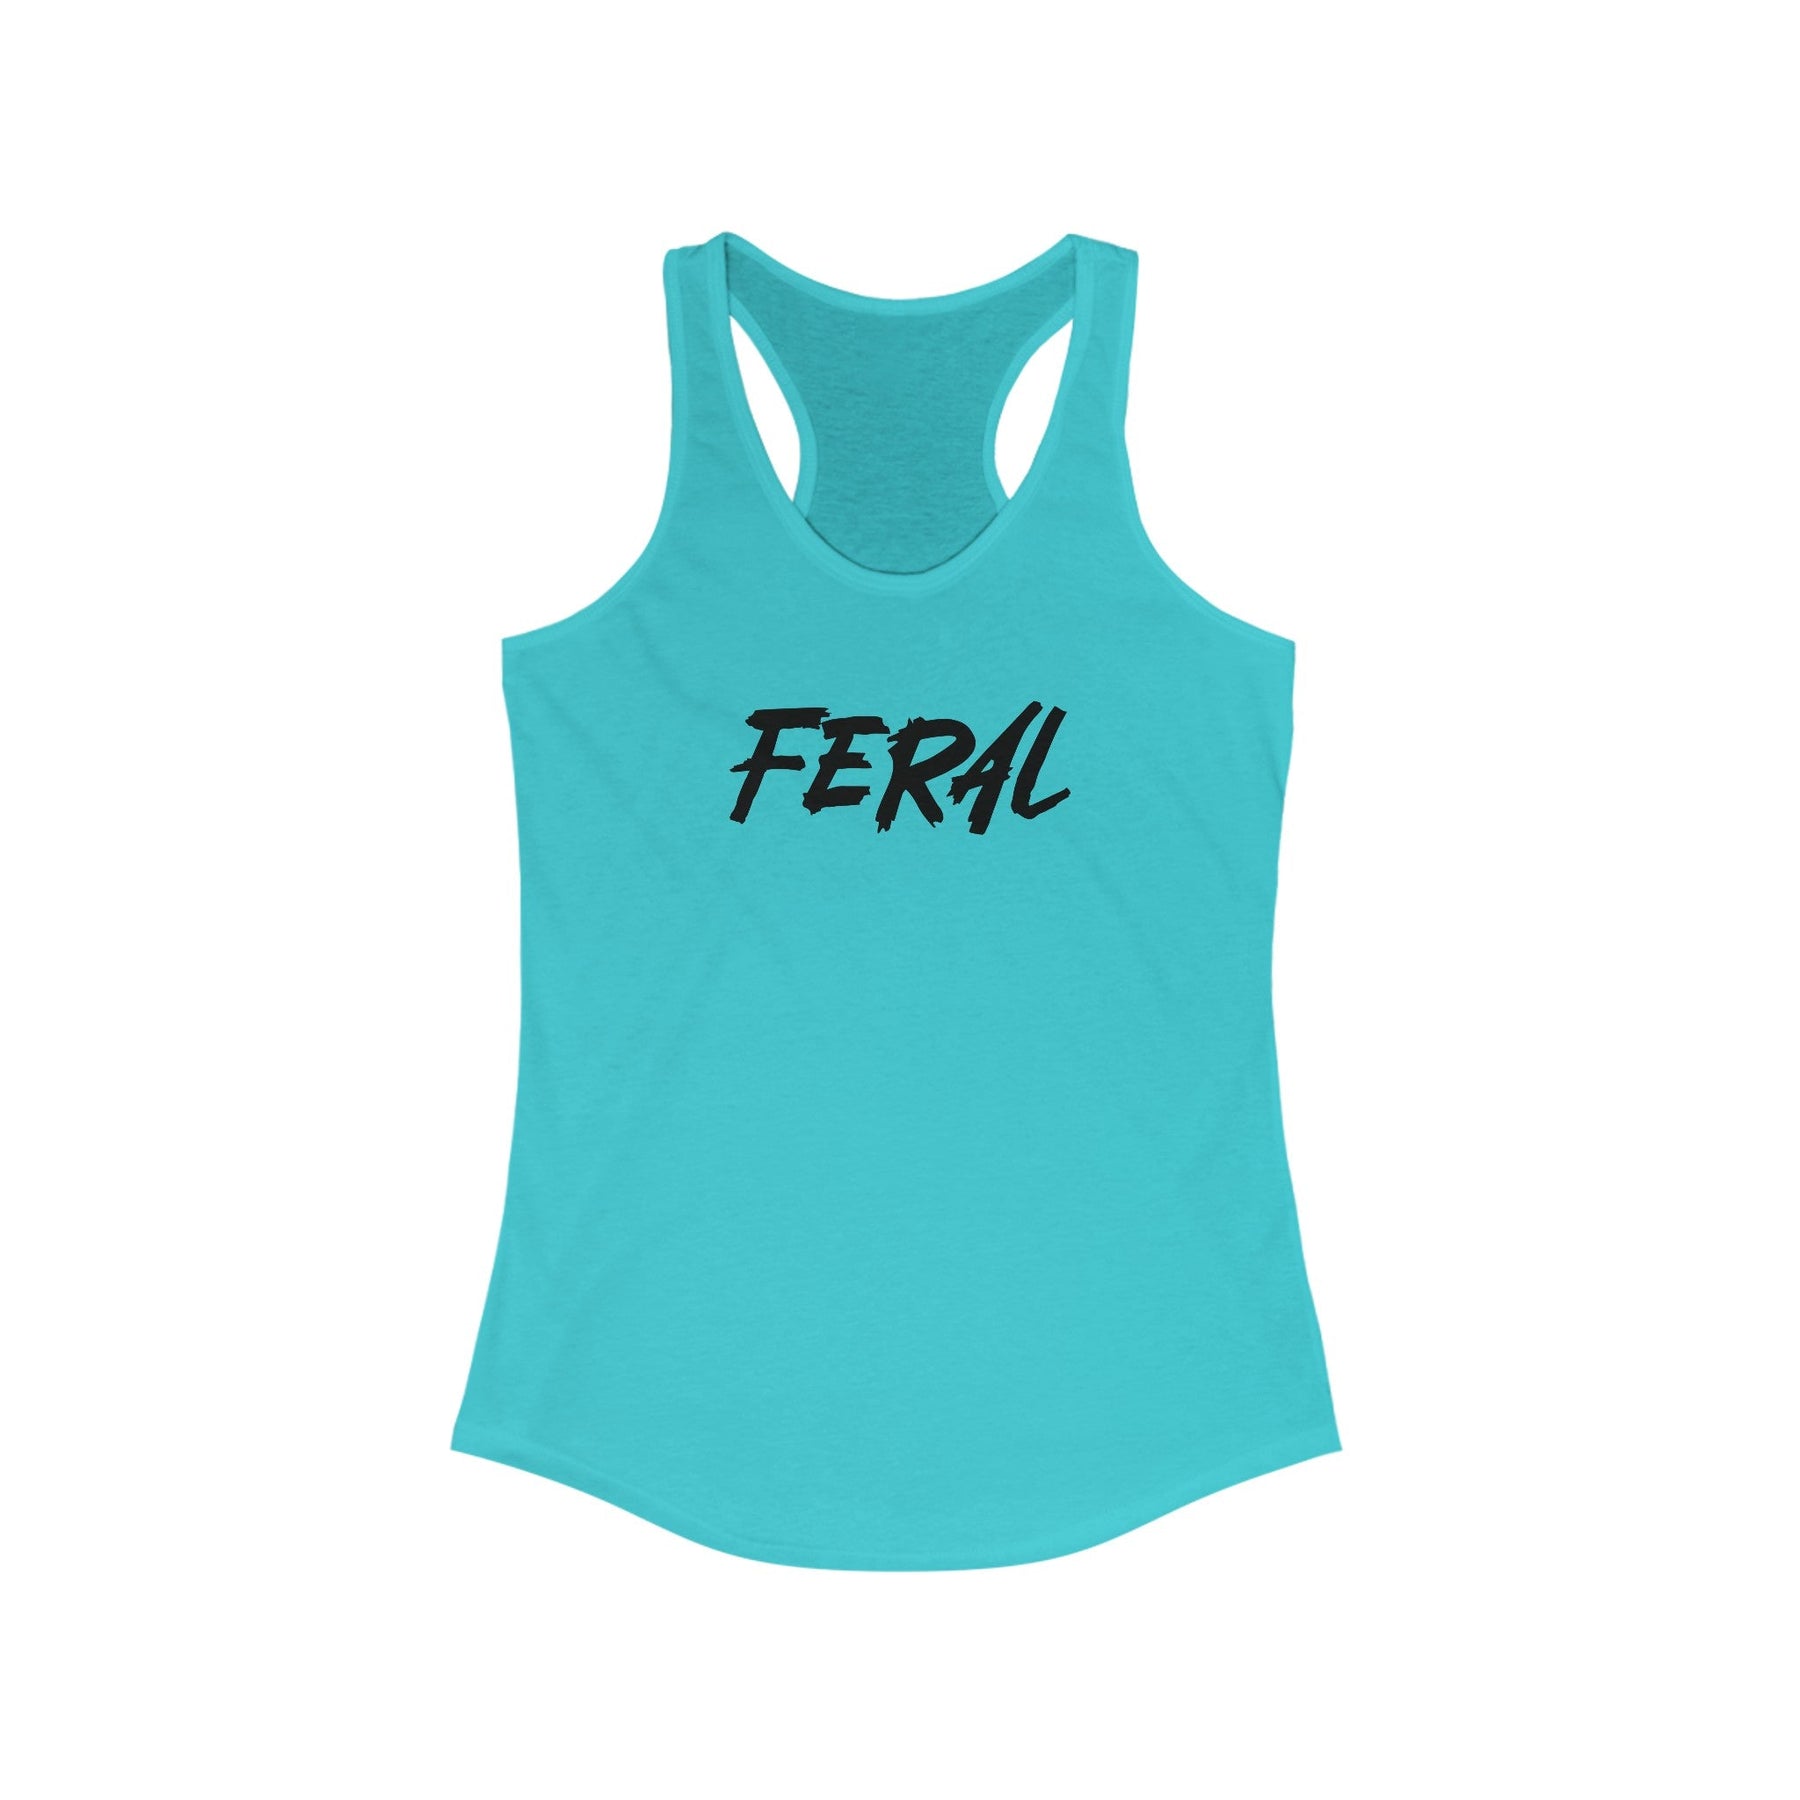 Feral Women's Racerback Tank - Goth Cloth Co.Tank Top40750862957395385564